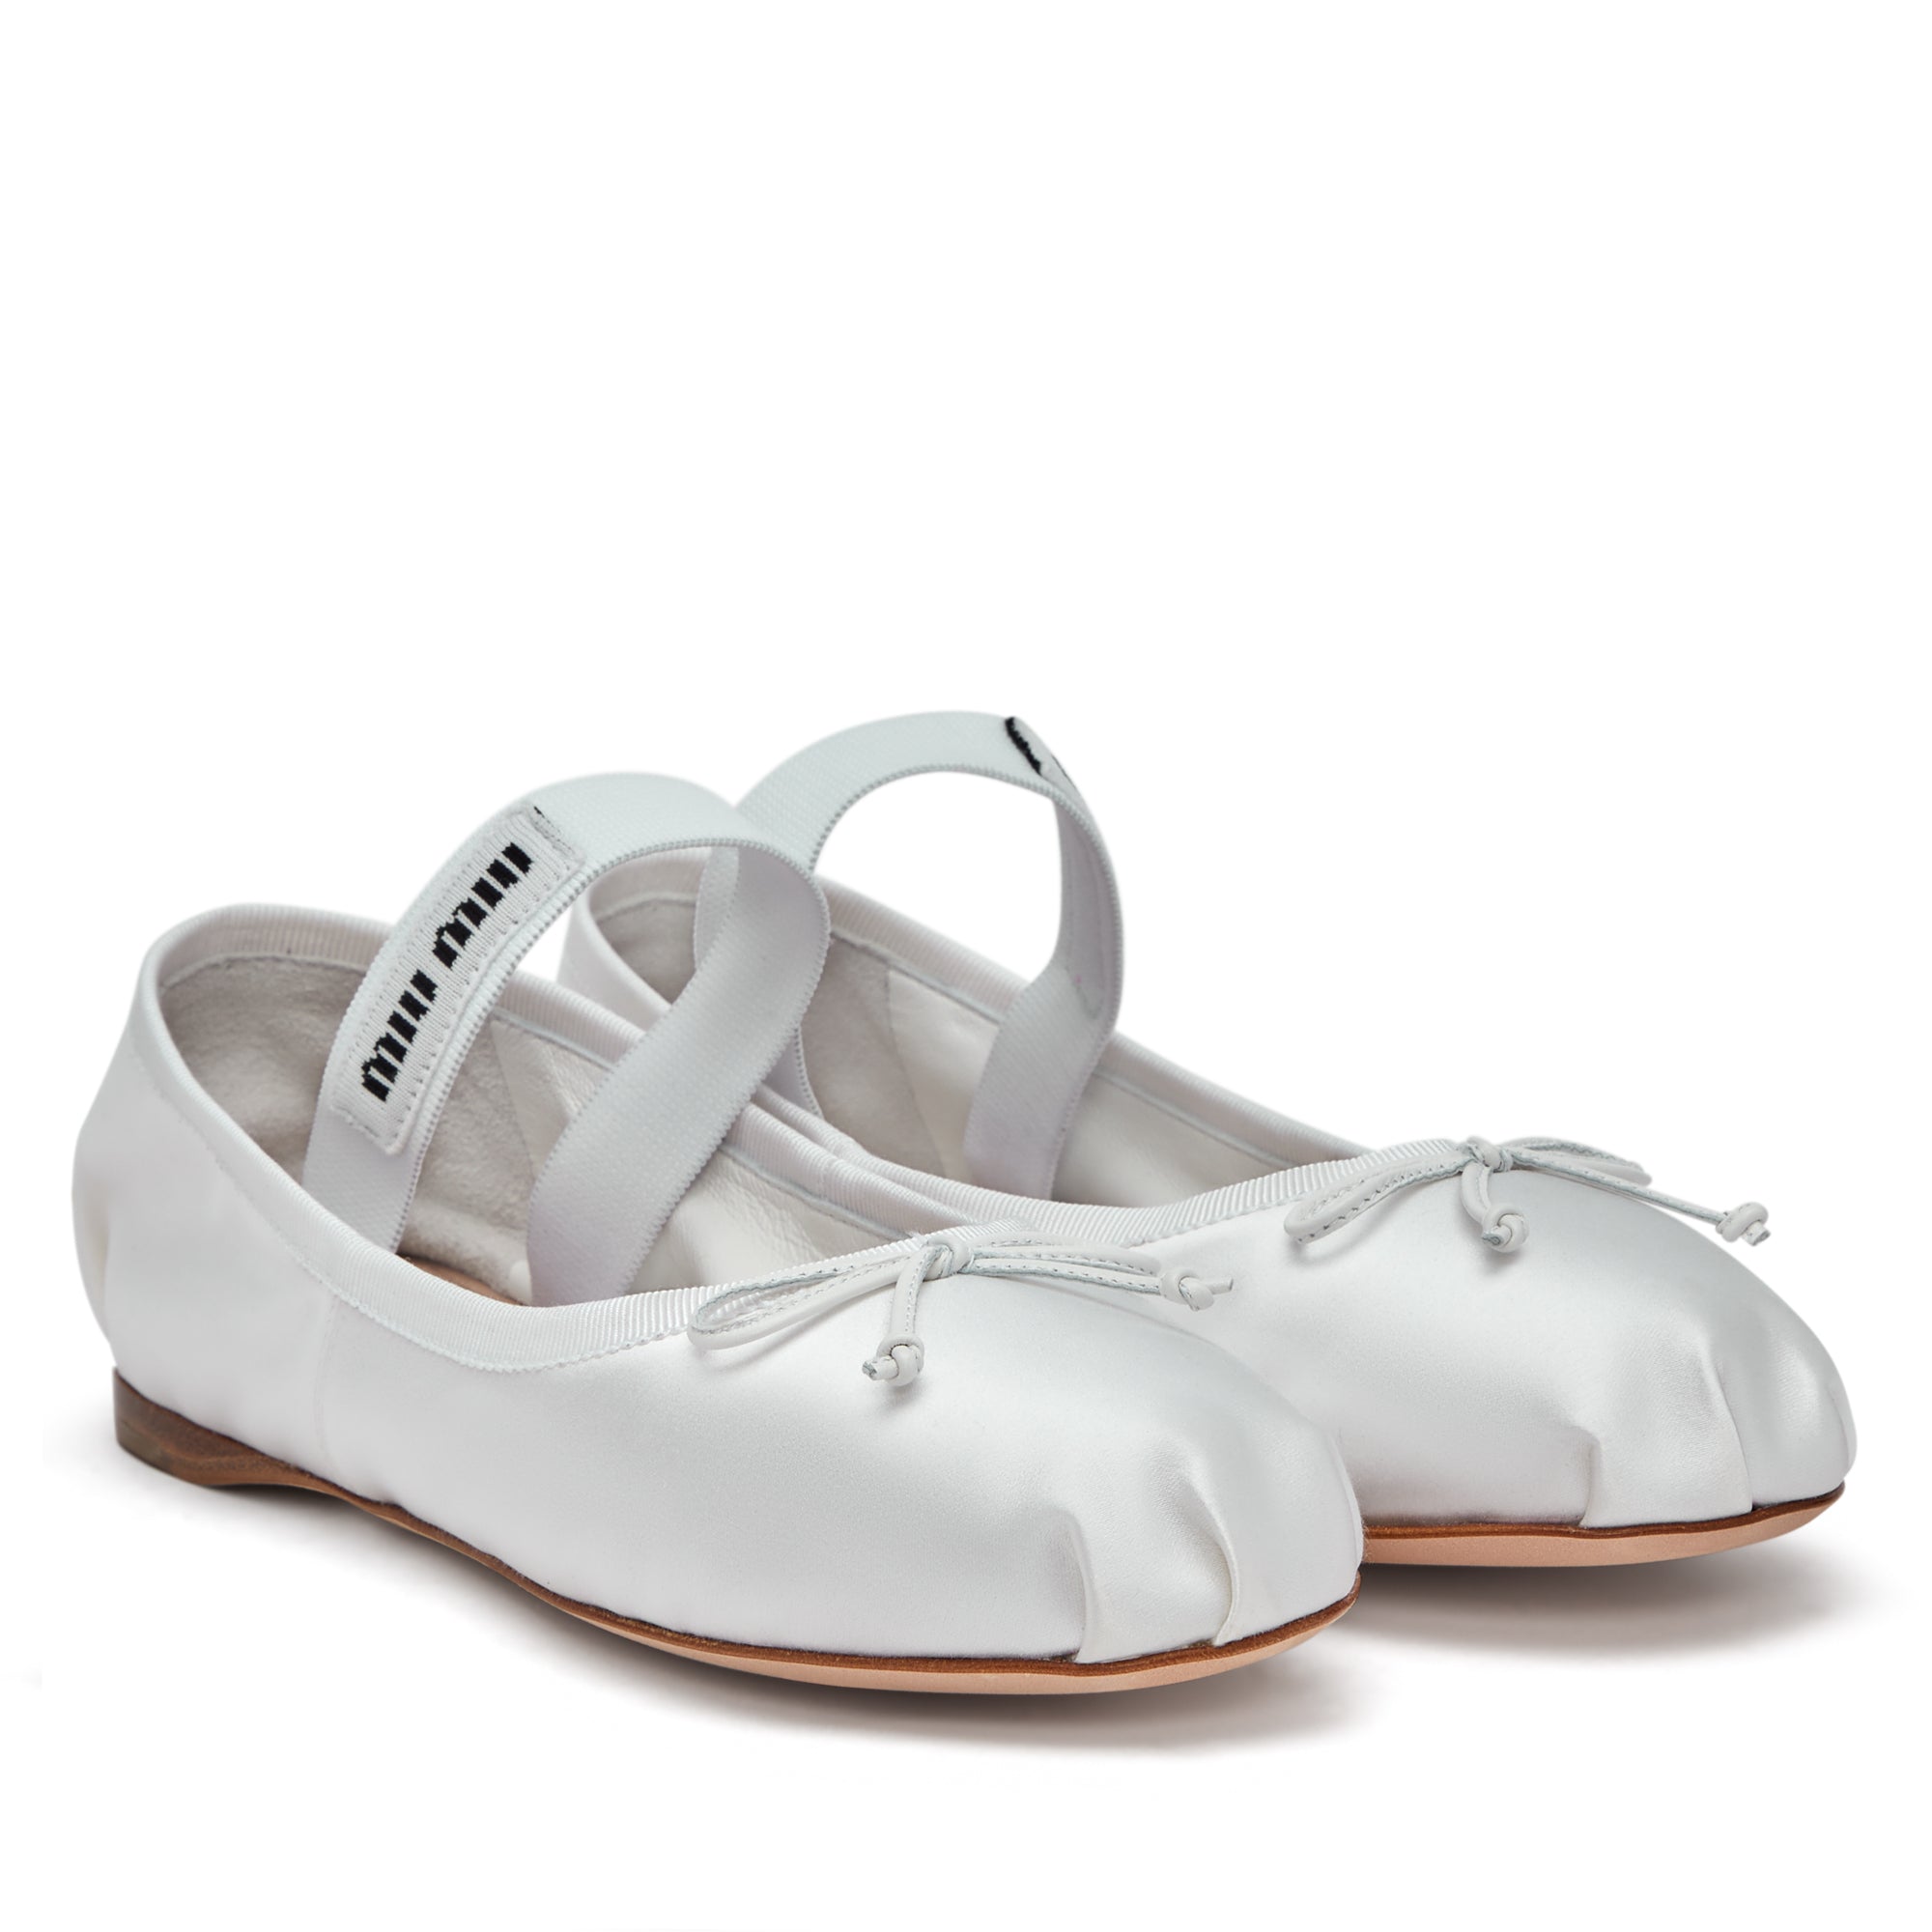 Miu Miu - Women’s Ballerina Shoe - (White) view 4